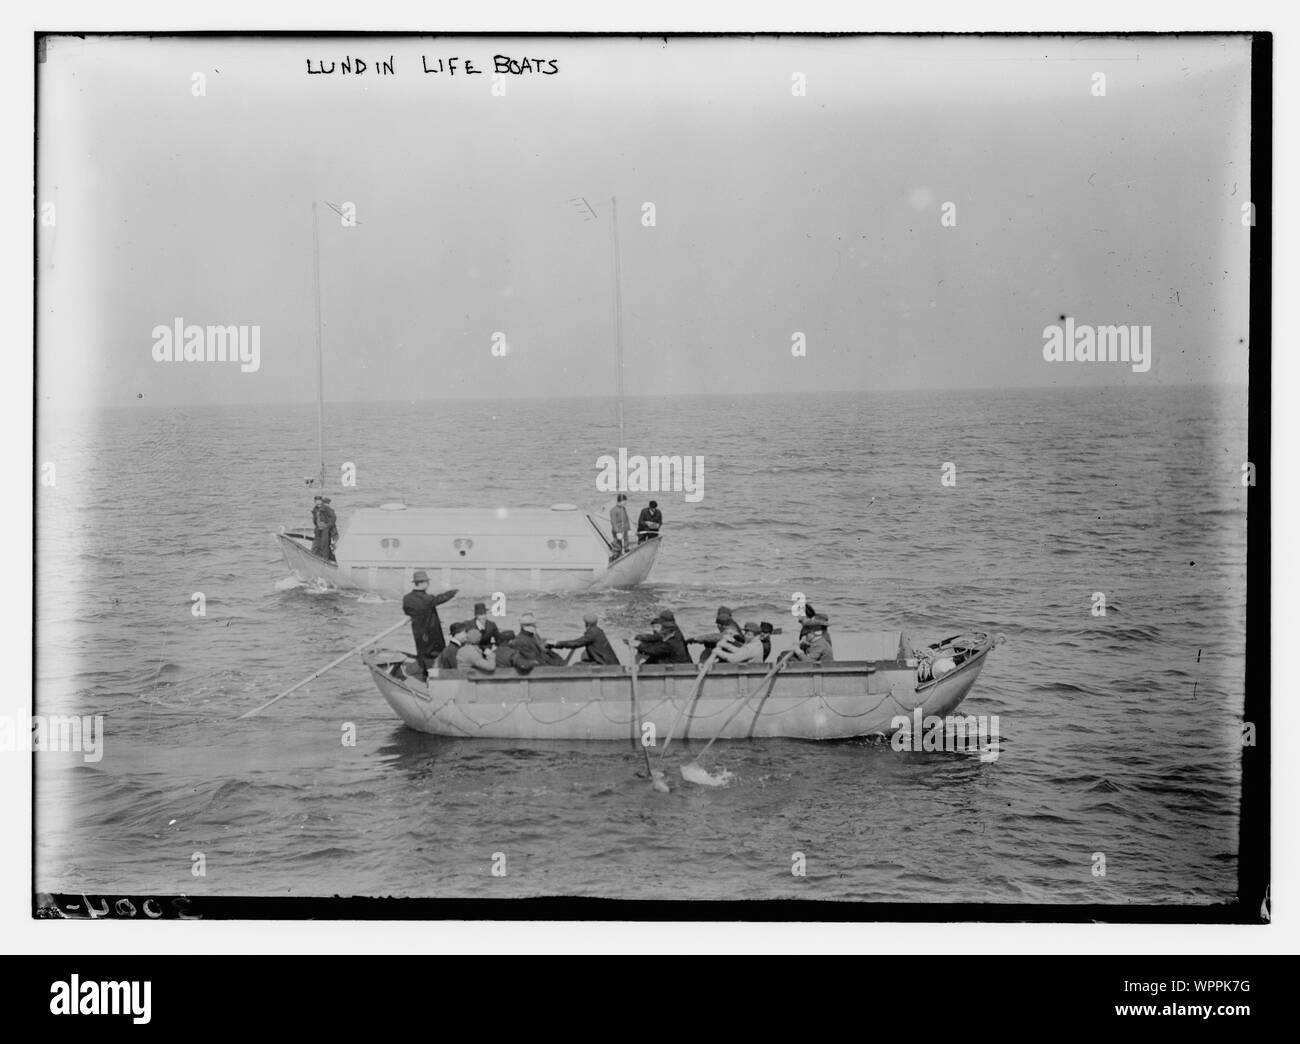 Lundin lifeboats Stock Photo